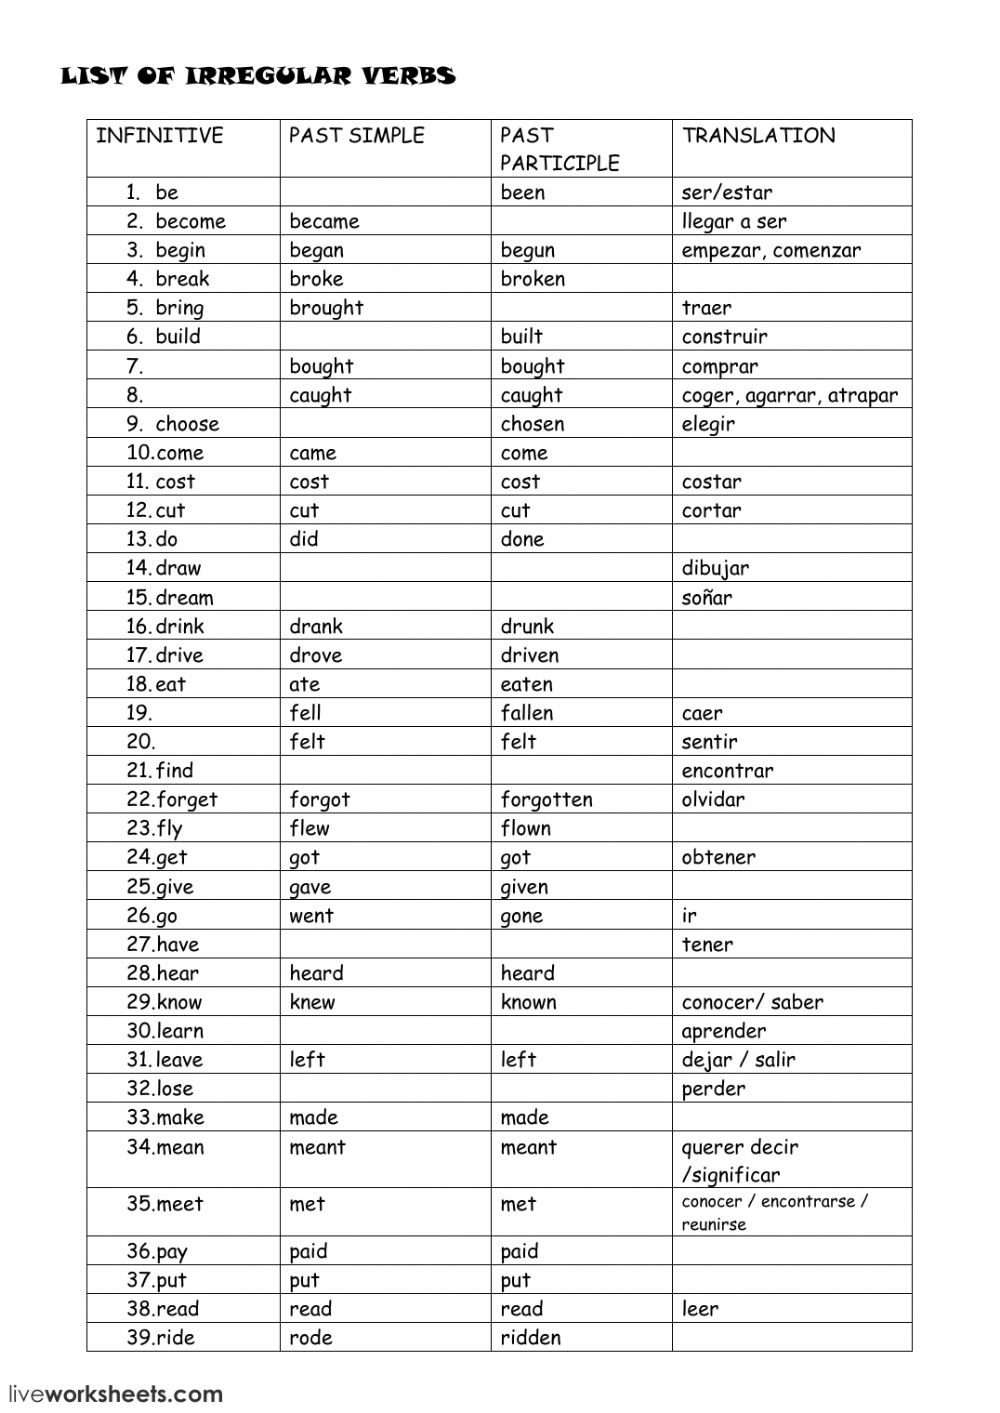 english-verbs-list-pdf-cleversavings